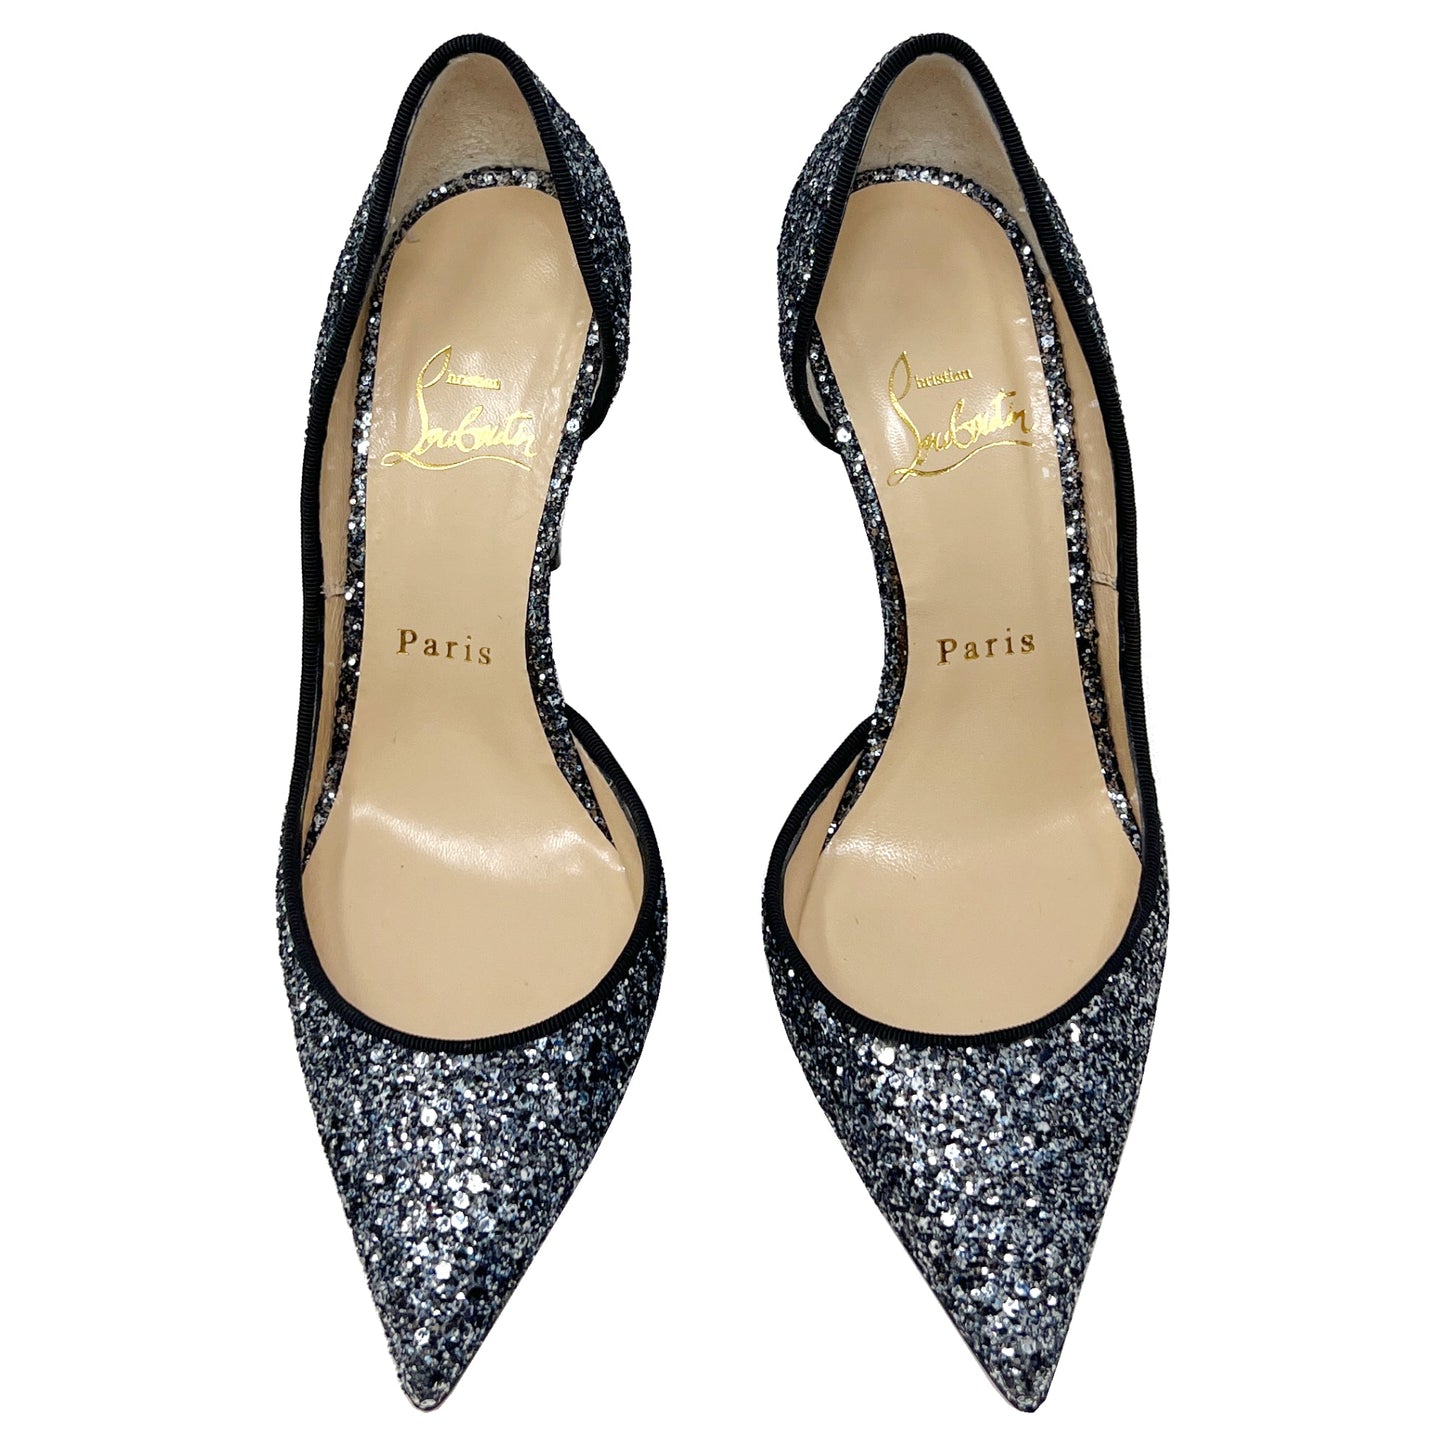 Christian Louboutin Iriza Blue Silver Glitter Pointed Toe D'Orsay Pumps Heels Size EU 35.5